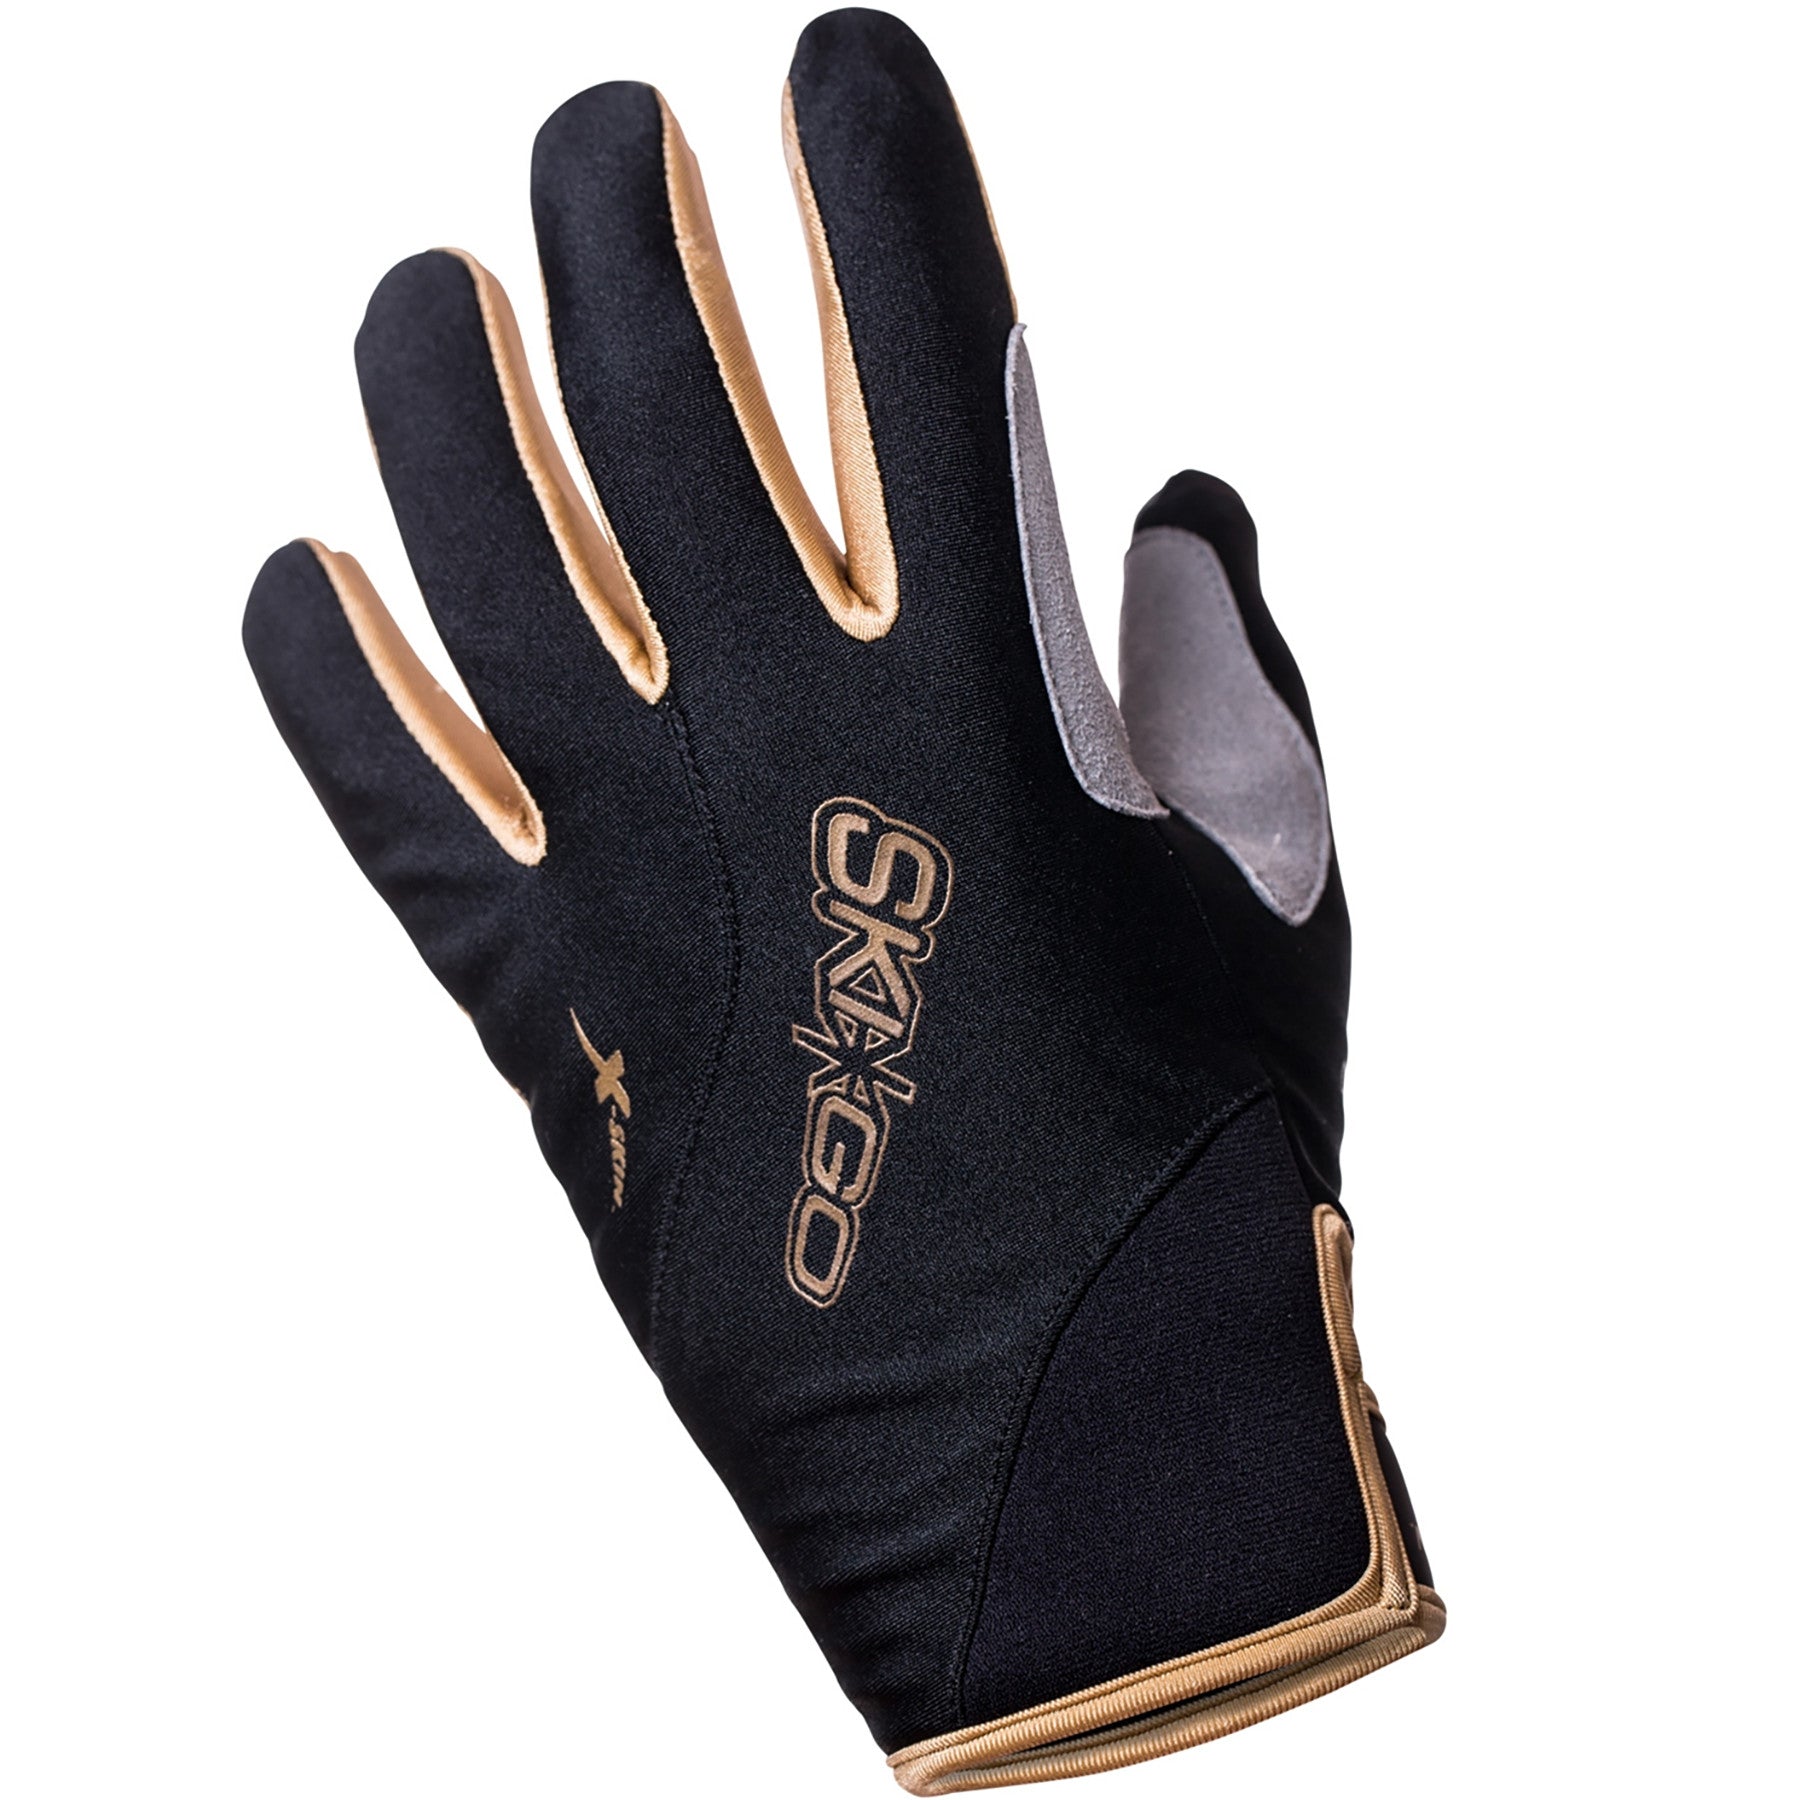 Skigo X-skin Glove 15-16 - 0